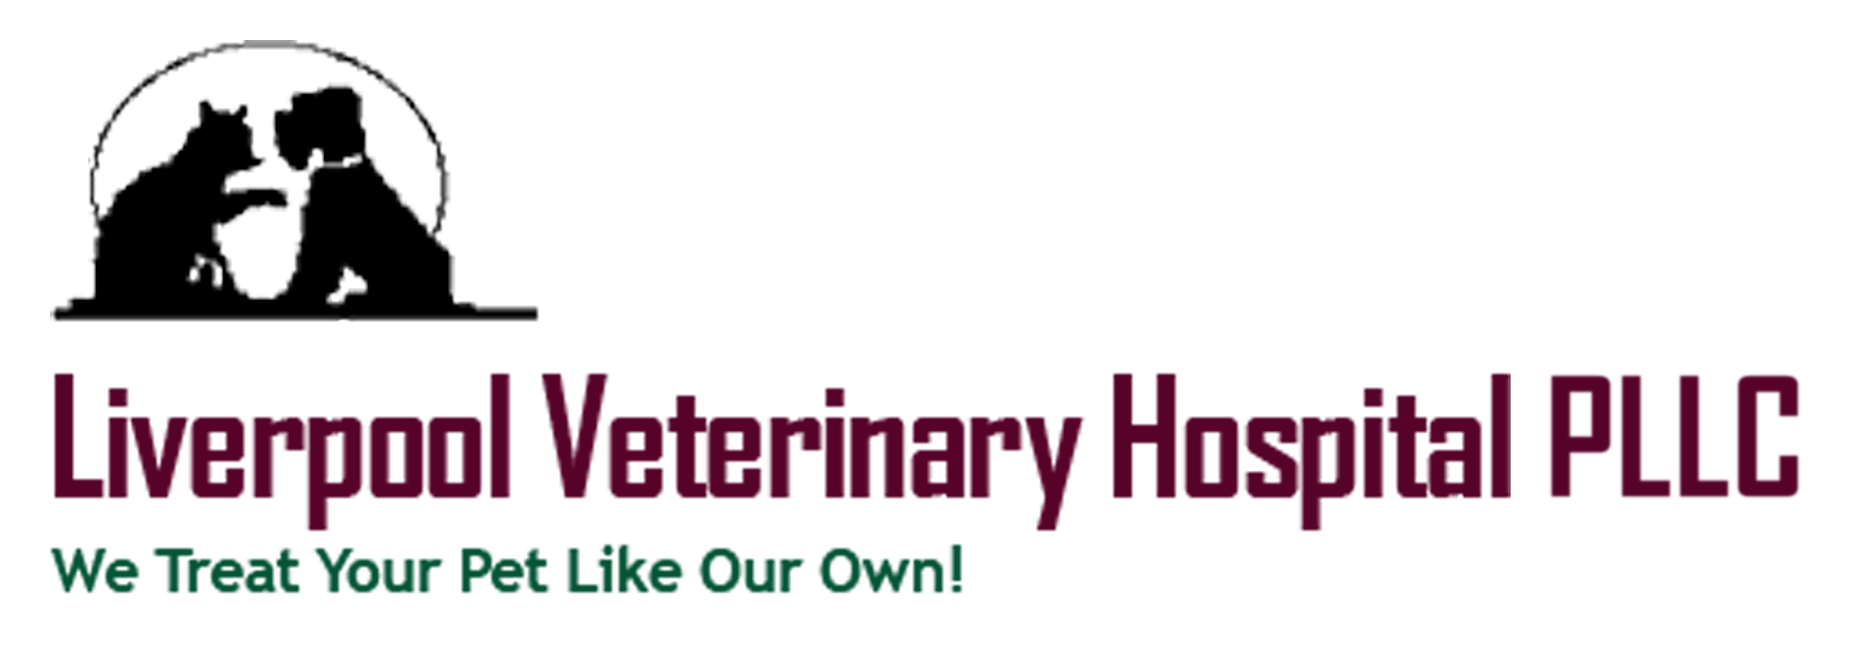 Liverpool Veterinary Hospital - Veterinarian In Liverpool Ny Us